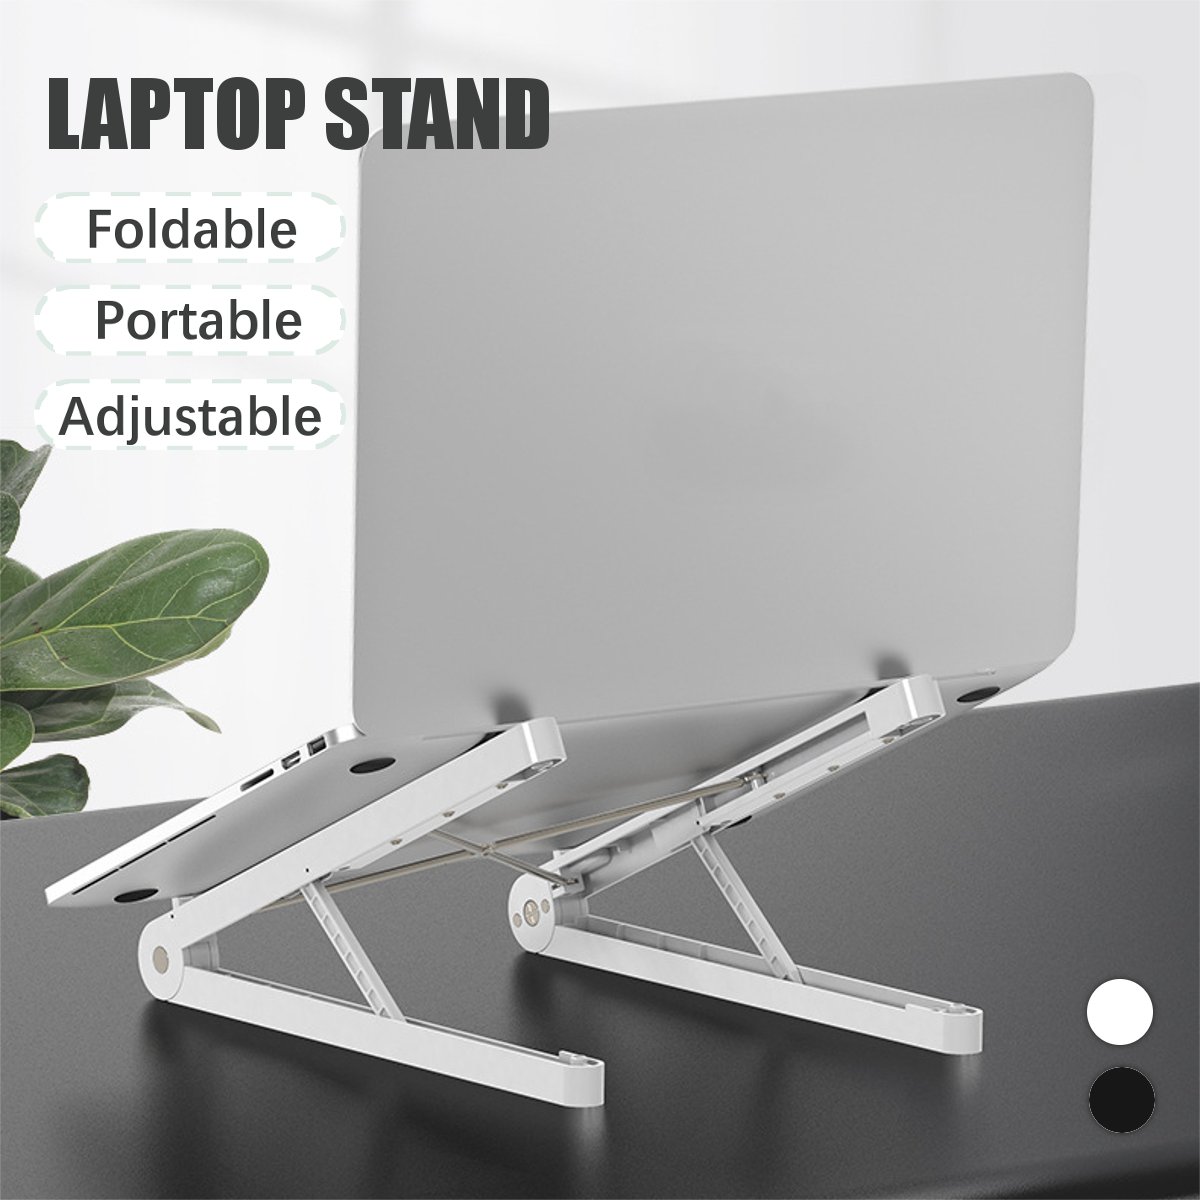 Portable-Laptop-Stand-Foldable-Adjustable-Non-slip-Notebook-Holder-Tablet-1764865-1